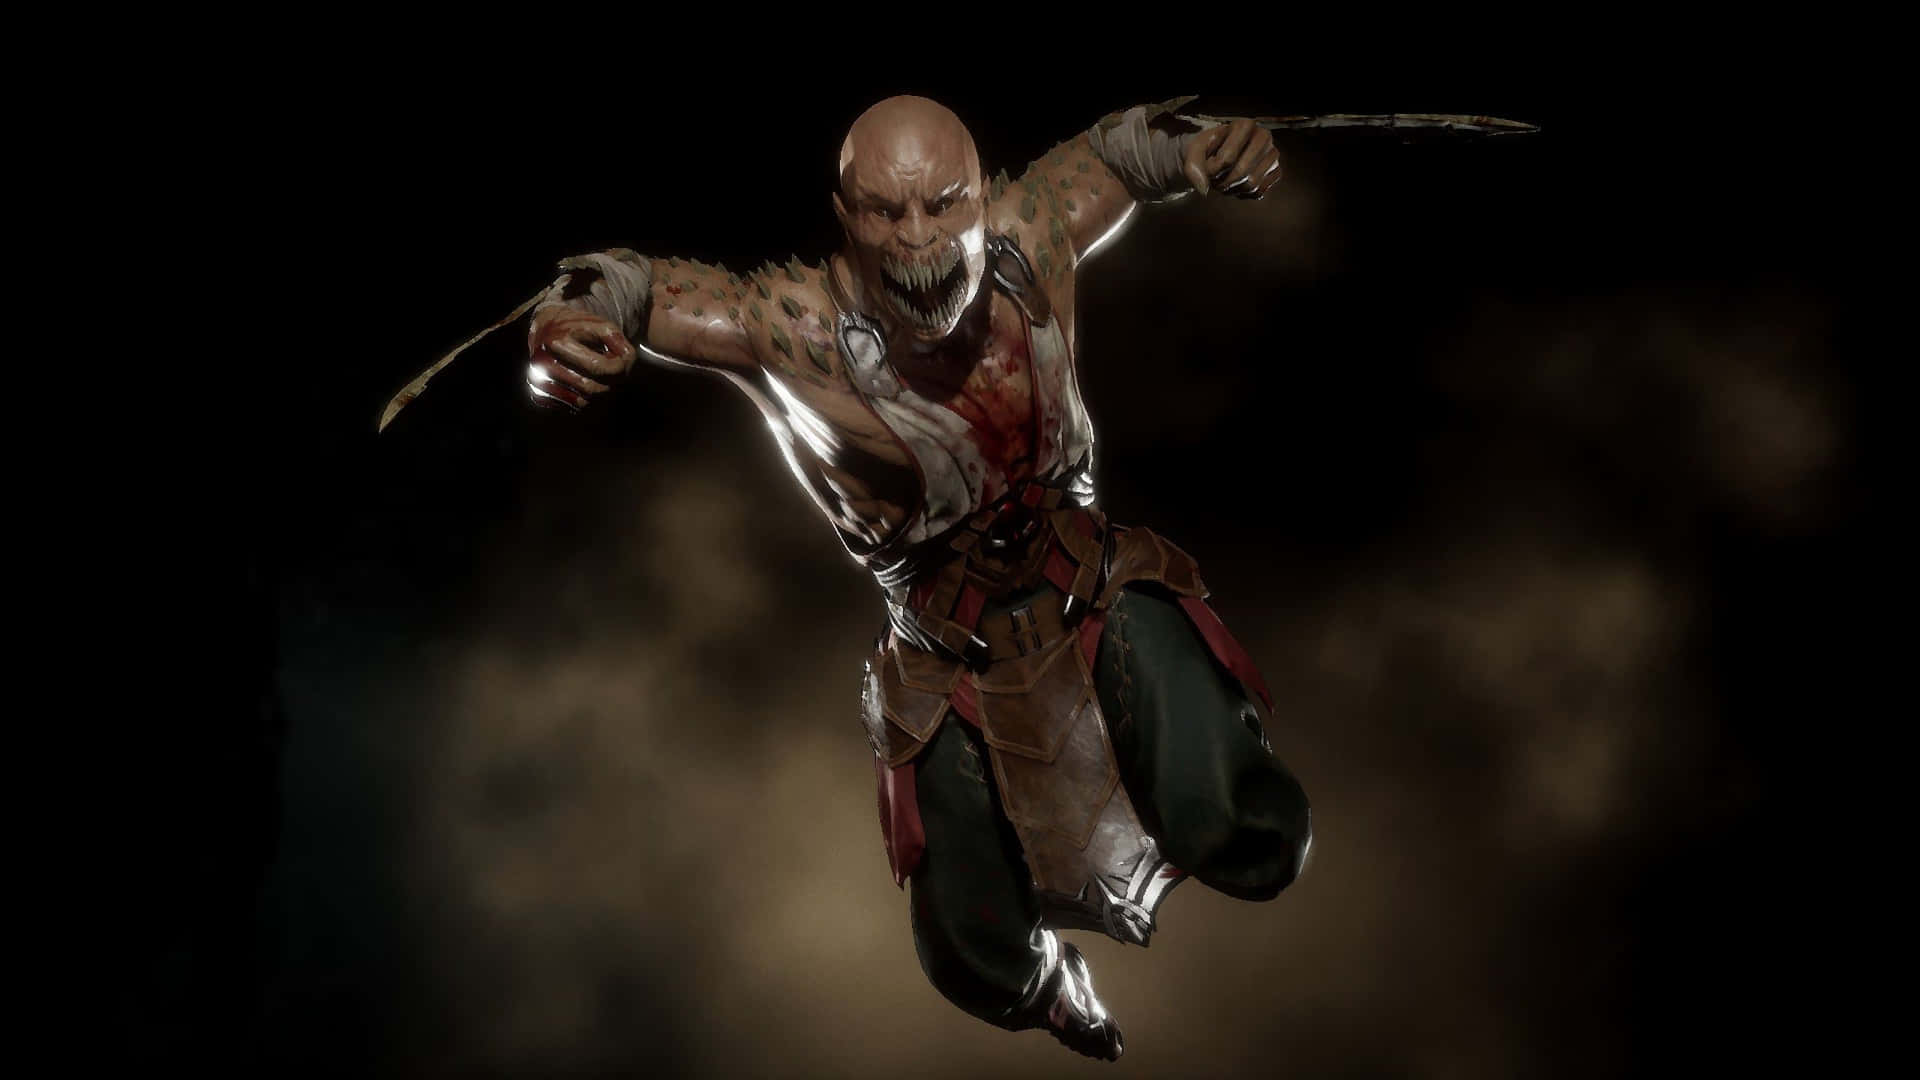 "Baraka, the fierce Tarkatan warrior in Mortal Kombat" Wallpaper